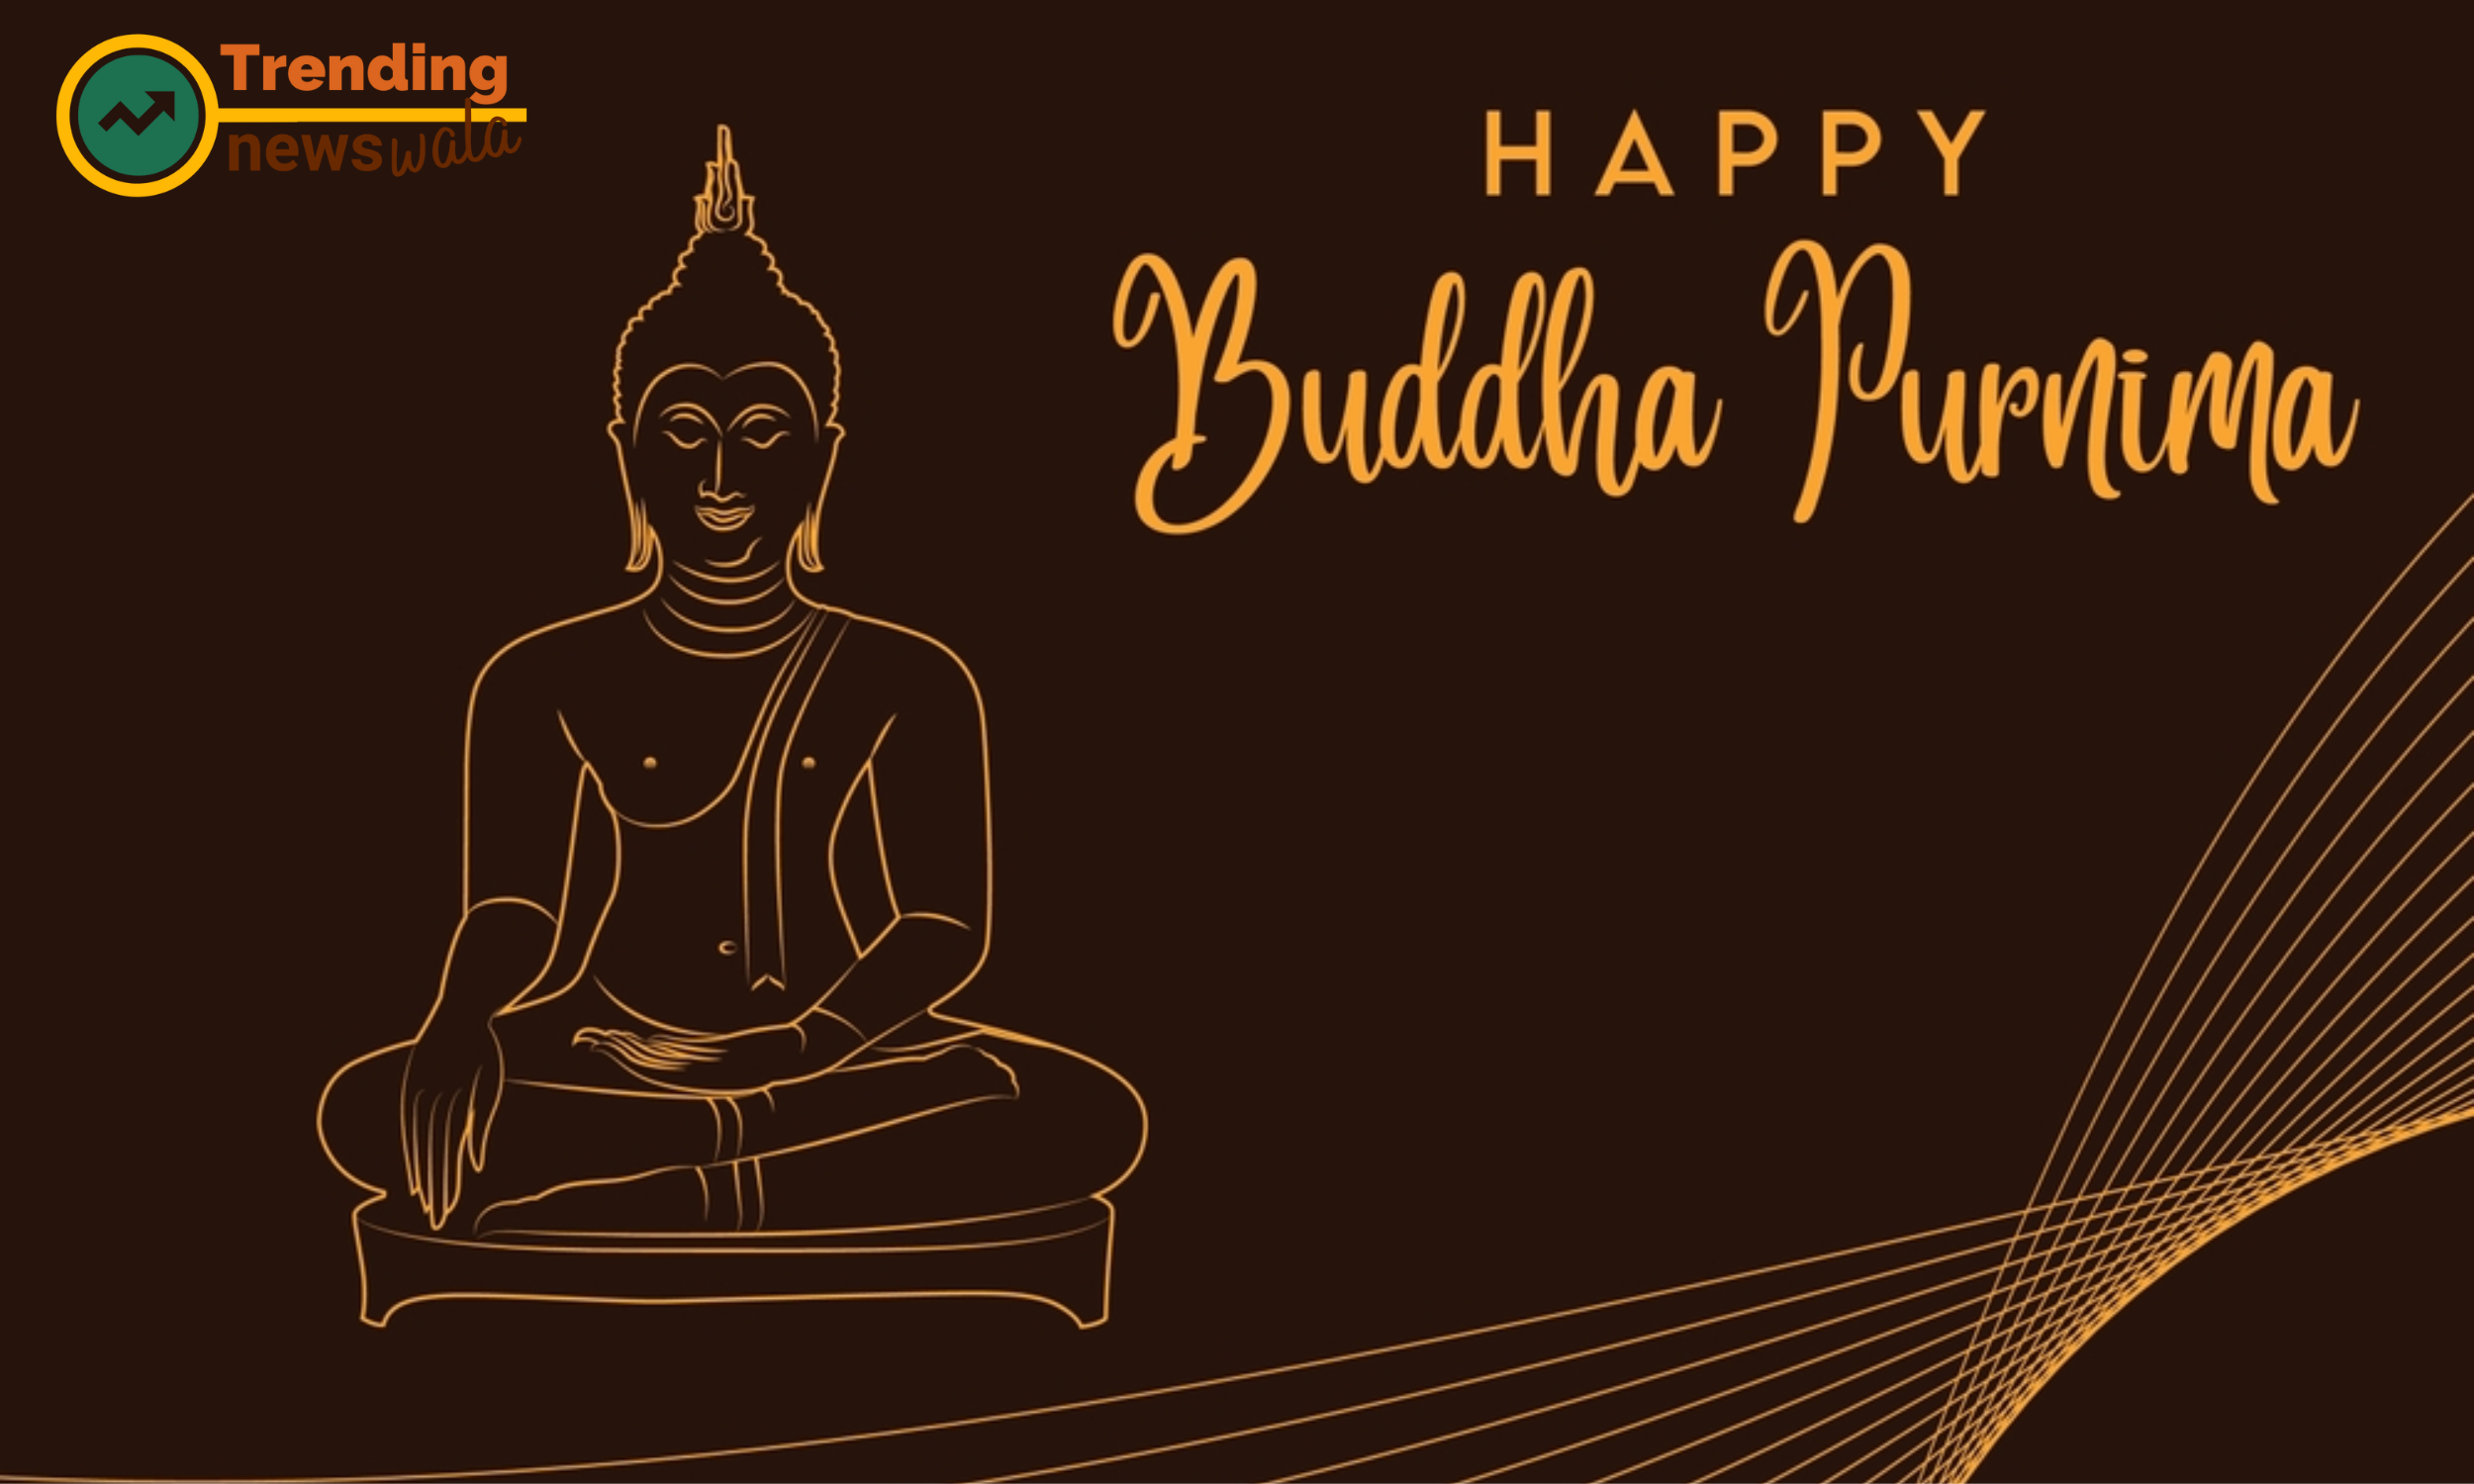 Buddha Purnima Siddhartha Gautama in Lumbini, Nepal